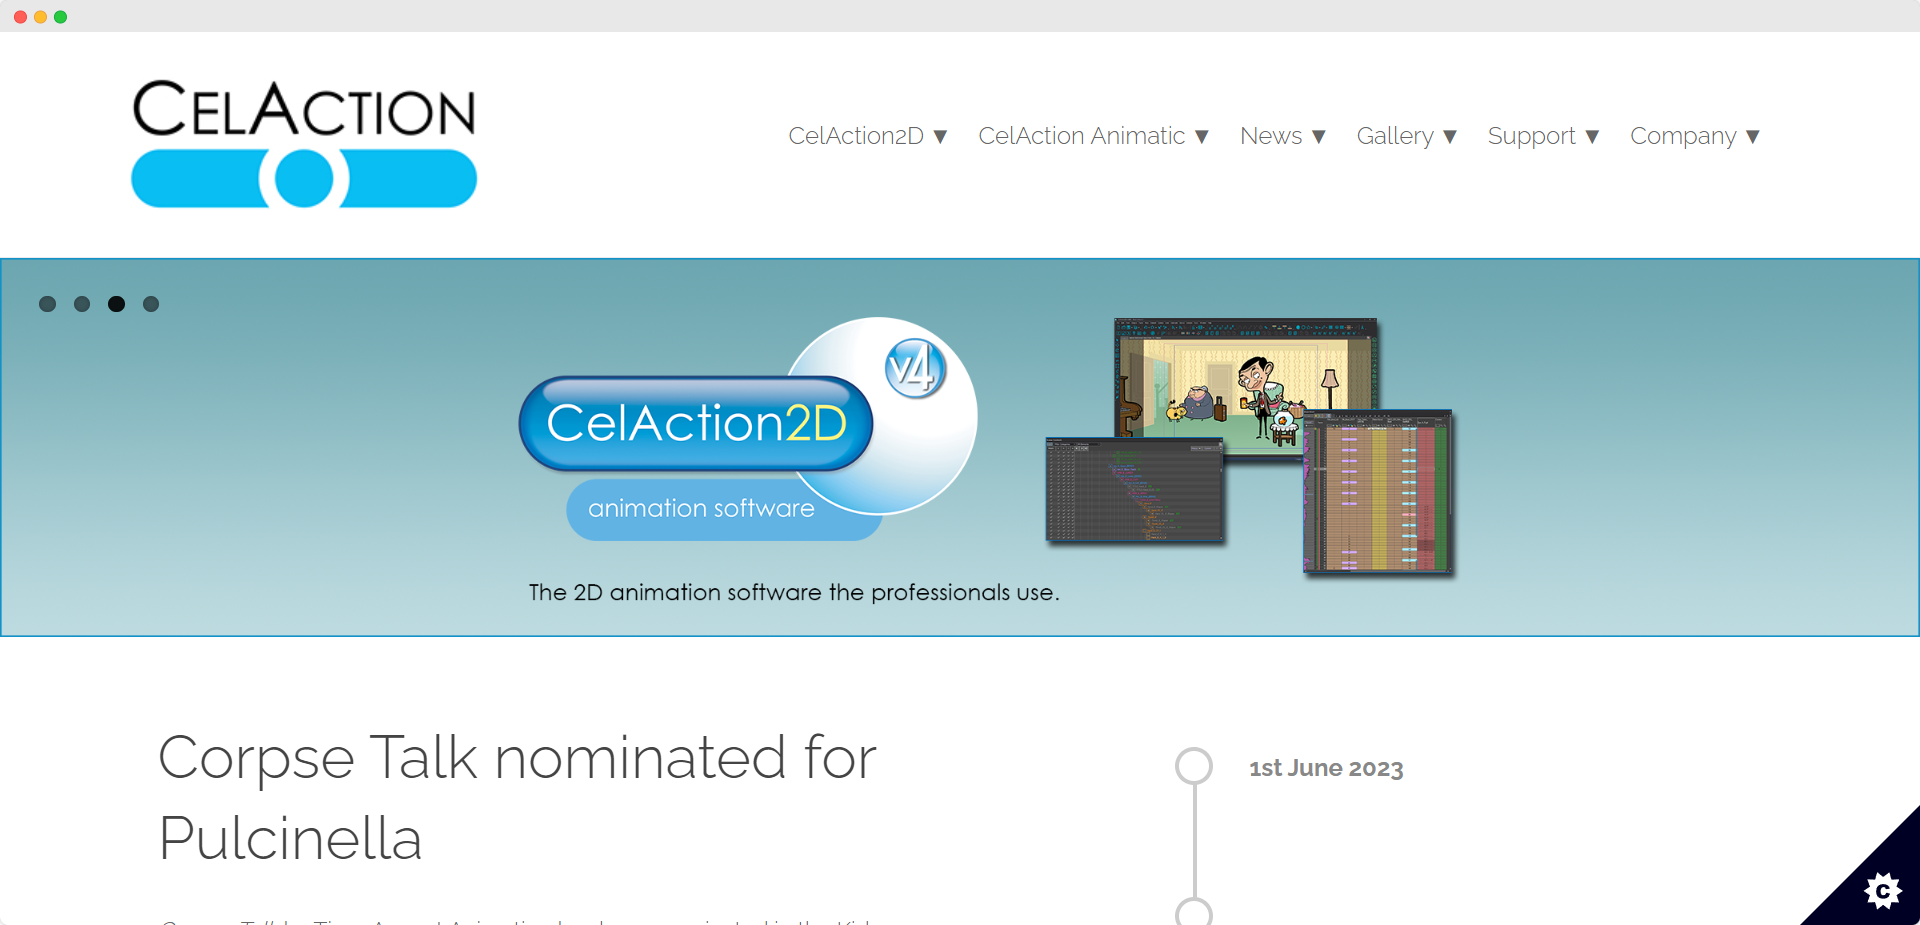 CelAction2D animation software